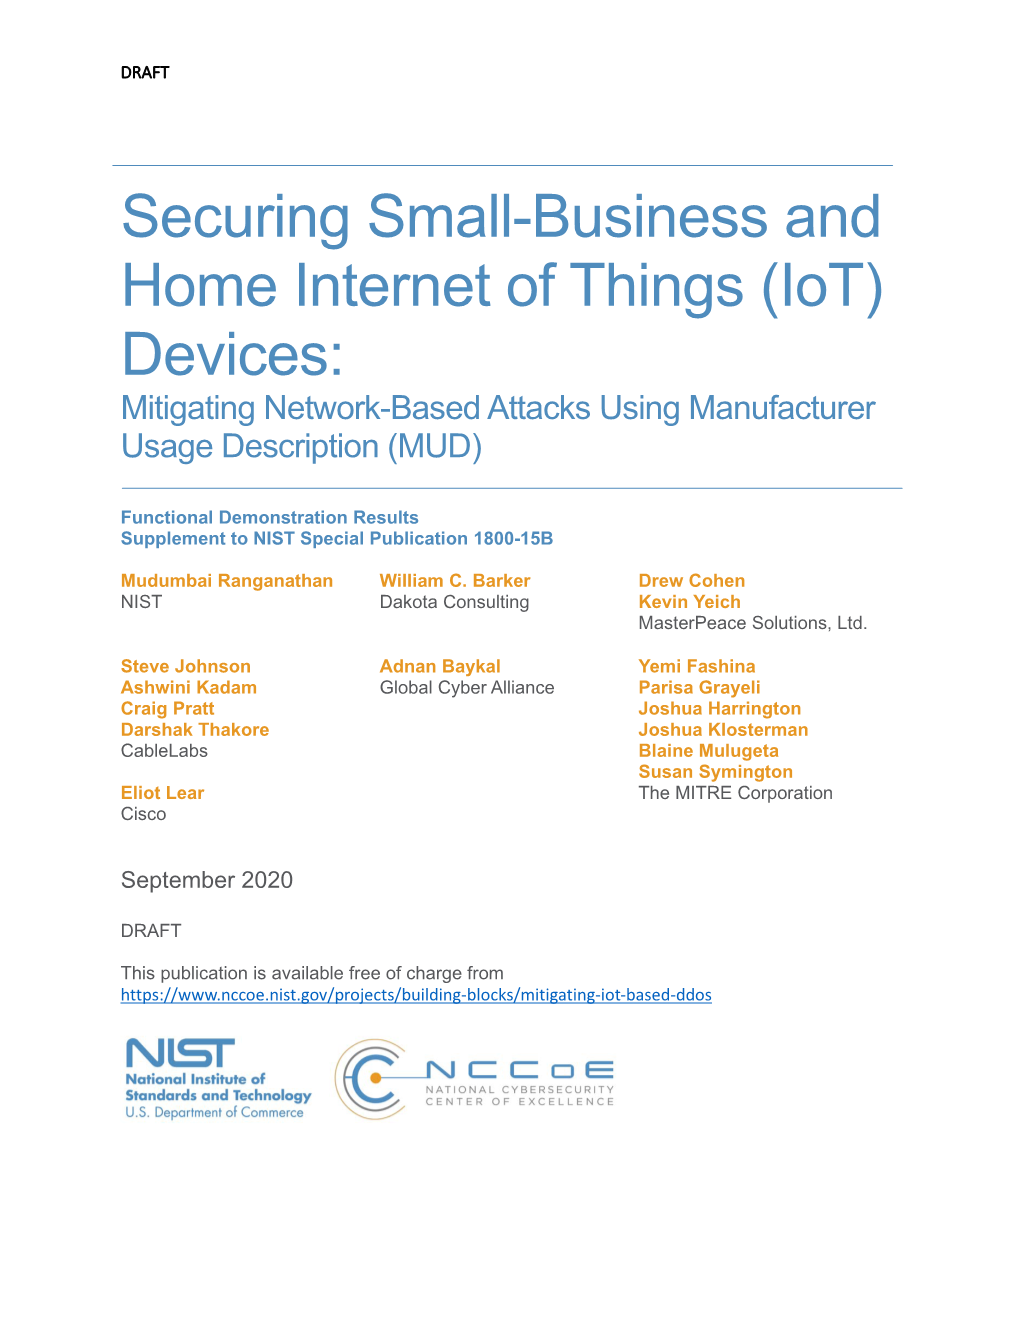 Iot) Devices: Mitigating Network-Based Attacks Using Manufacturer Usage Description (MUD)